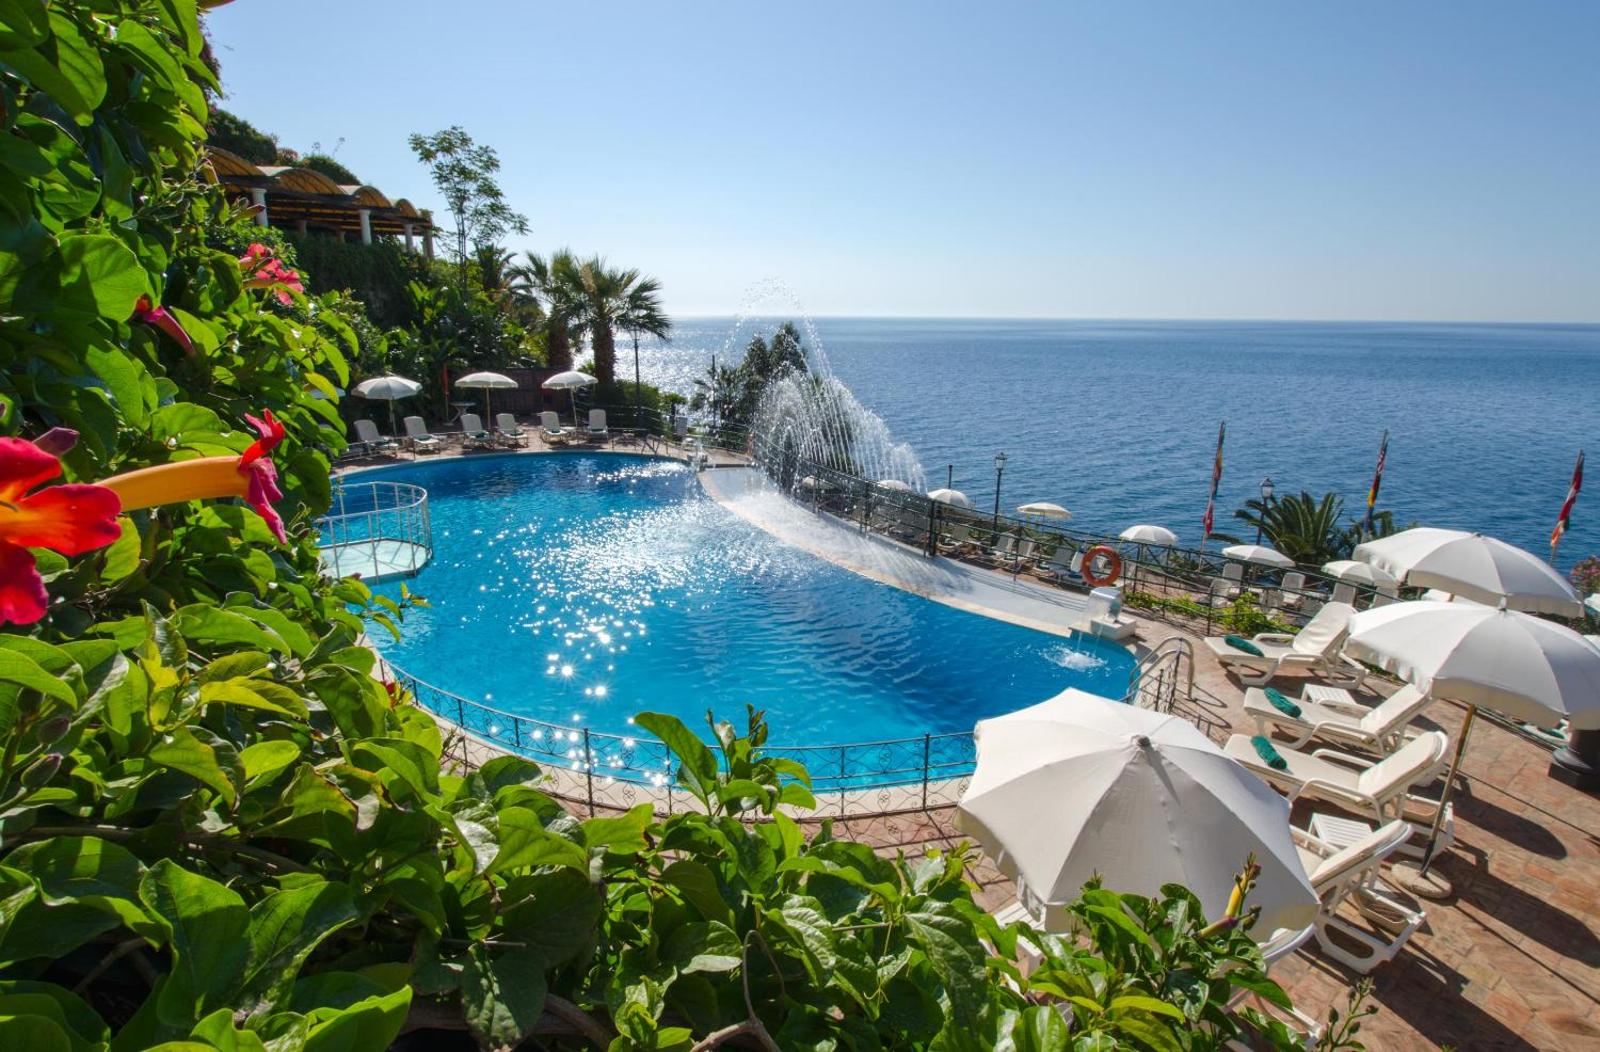 Baia Taormina Hotel & Spa